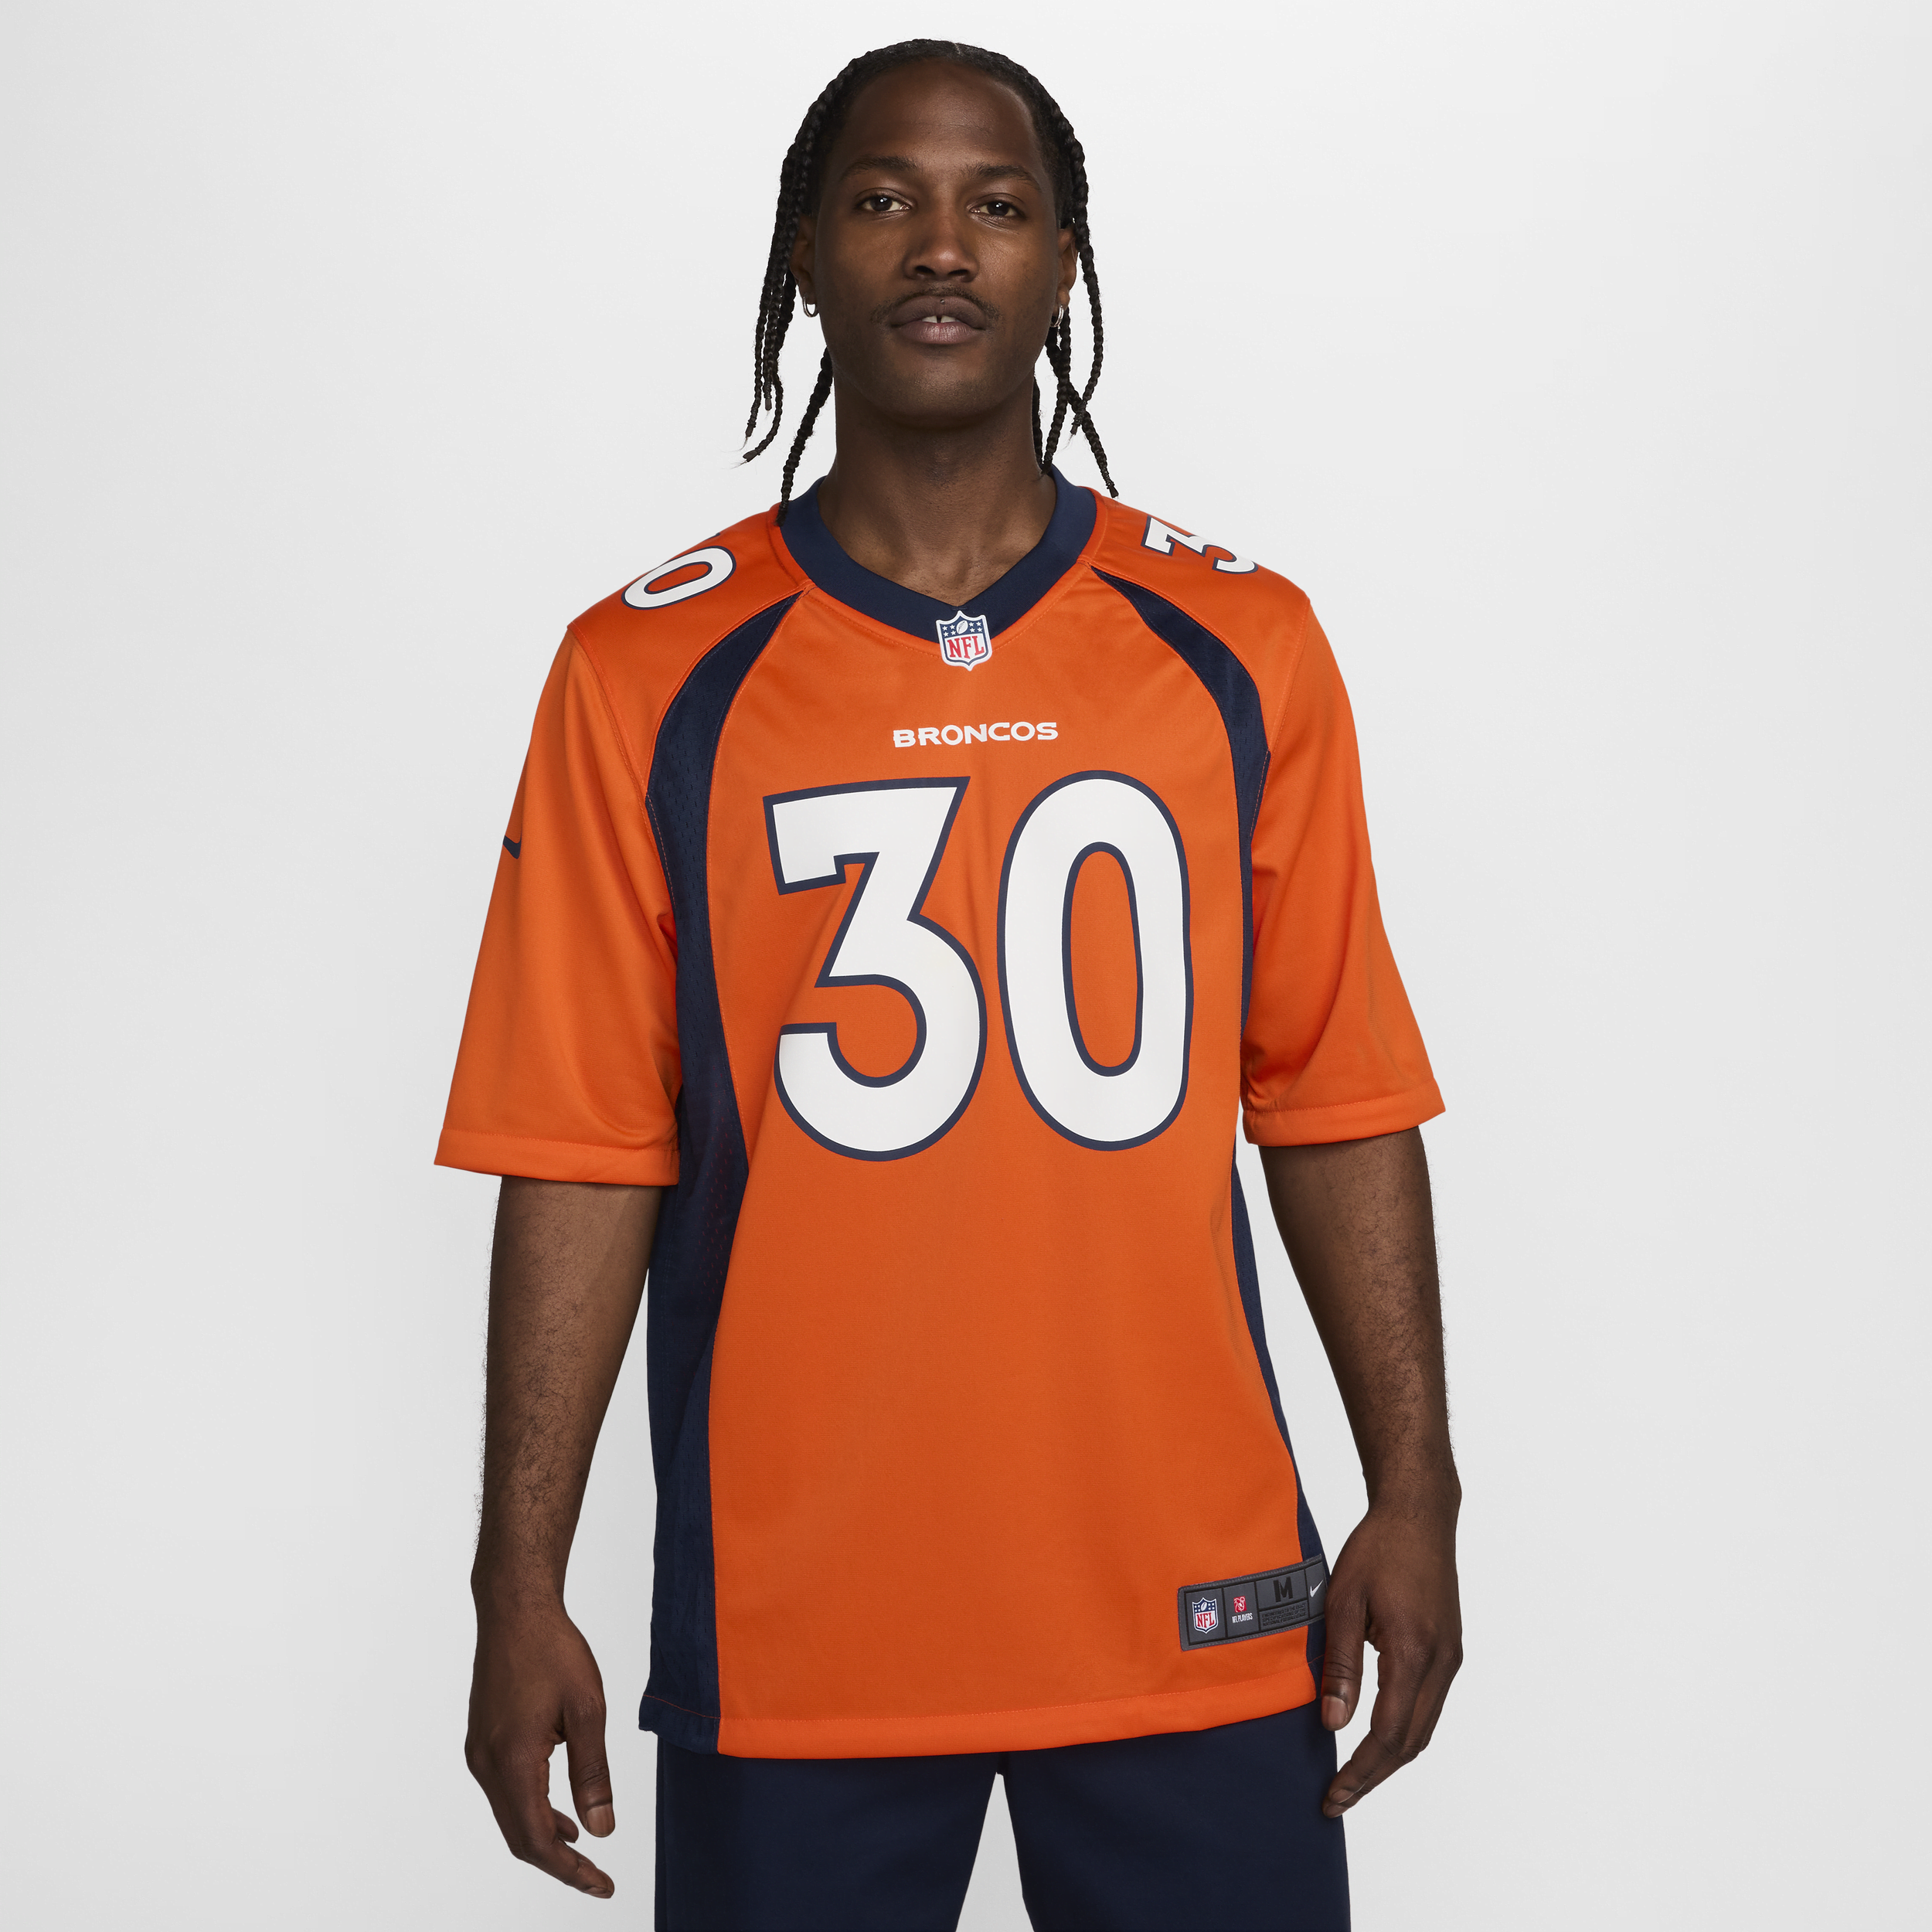 Nike NFL Denver Broncos (Phillip Lindsay) American-football-wedstrijdjersey voor heren - Oranje